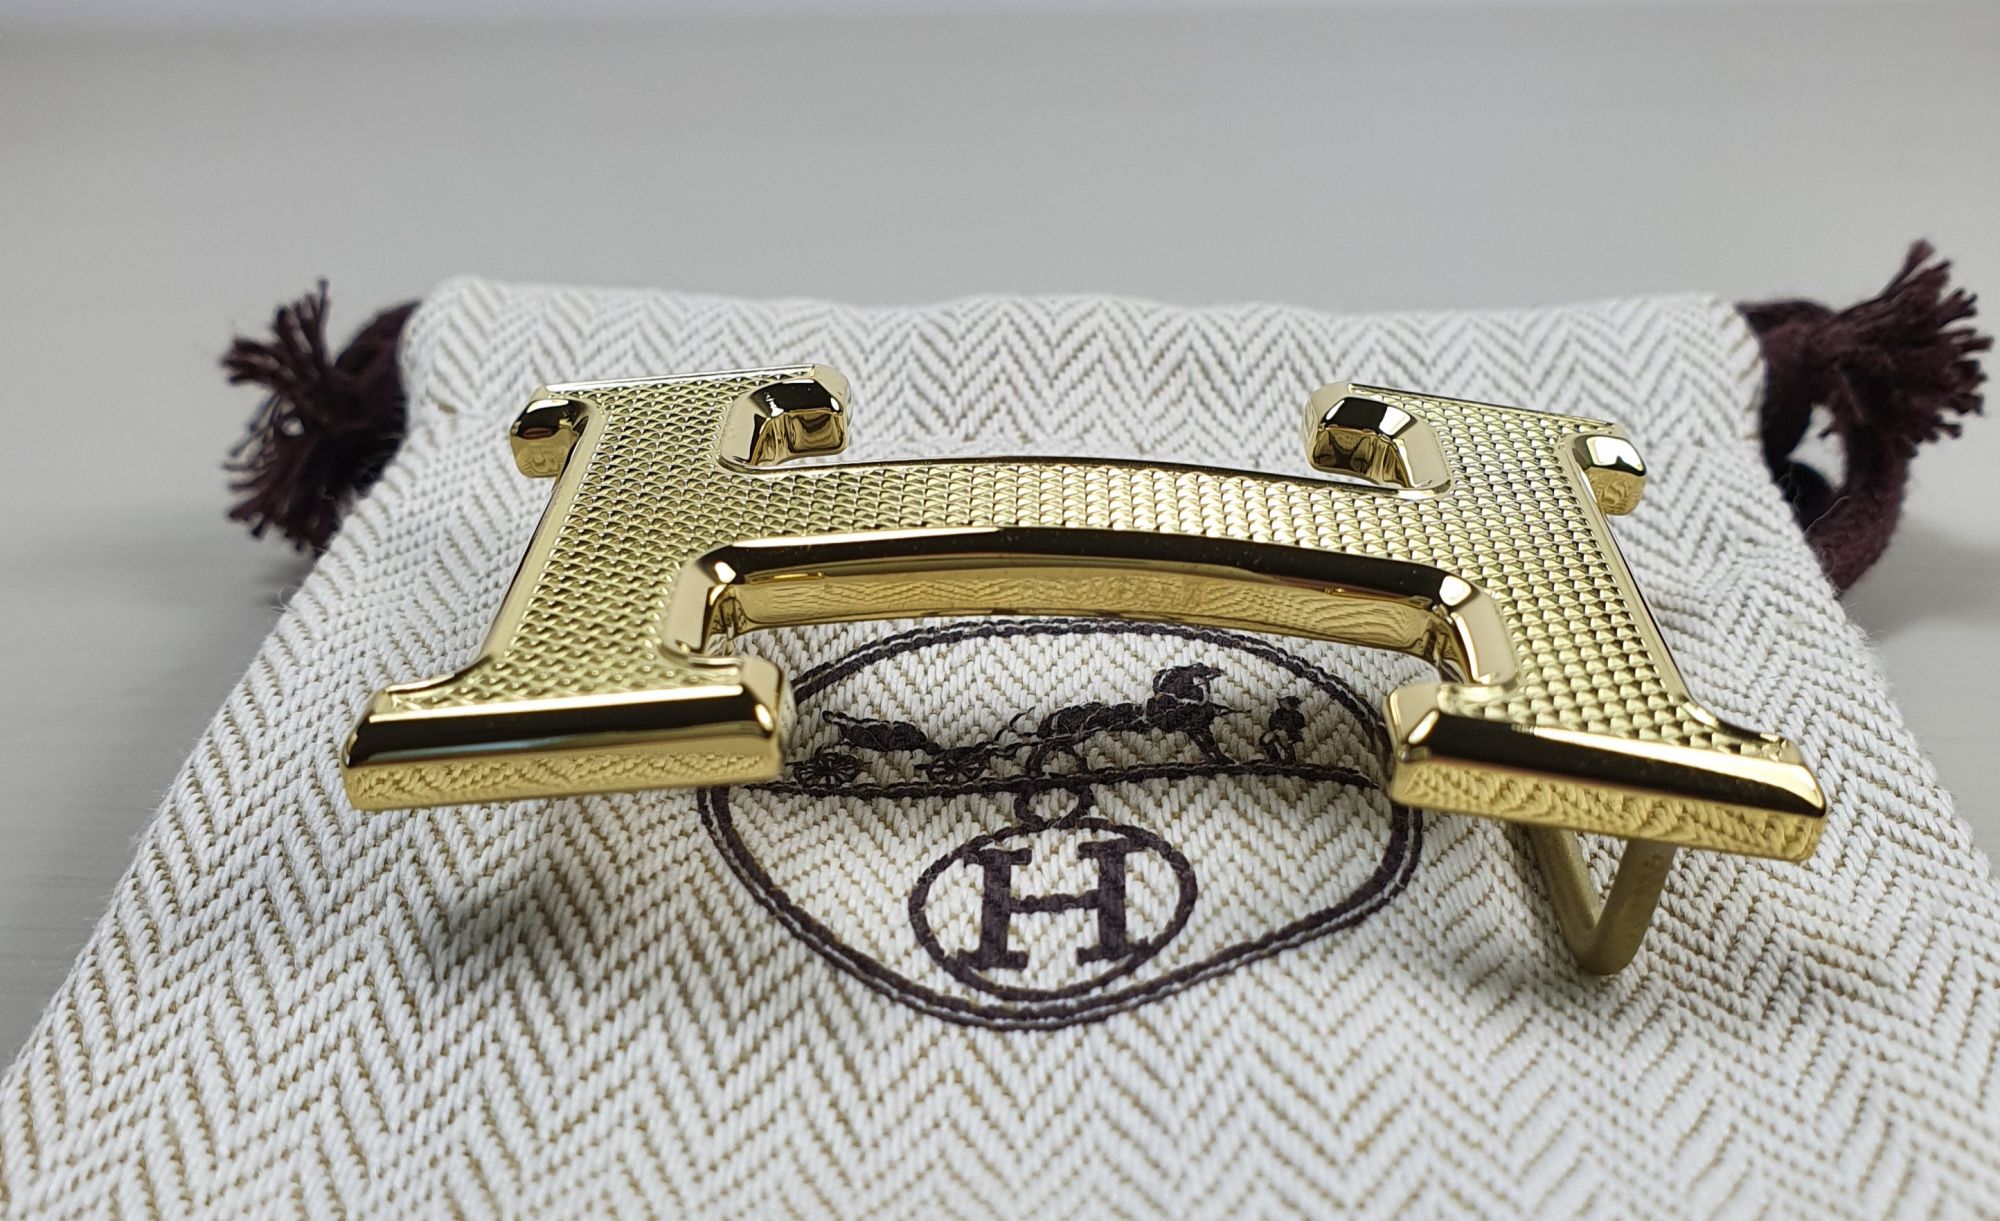 Hermès H guillochée belt buckle in gold plated metal